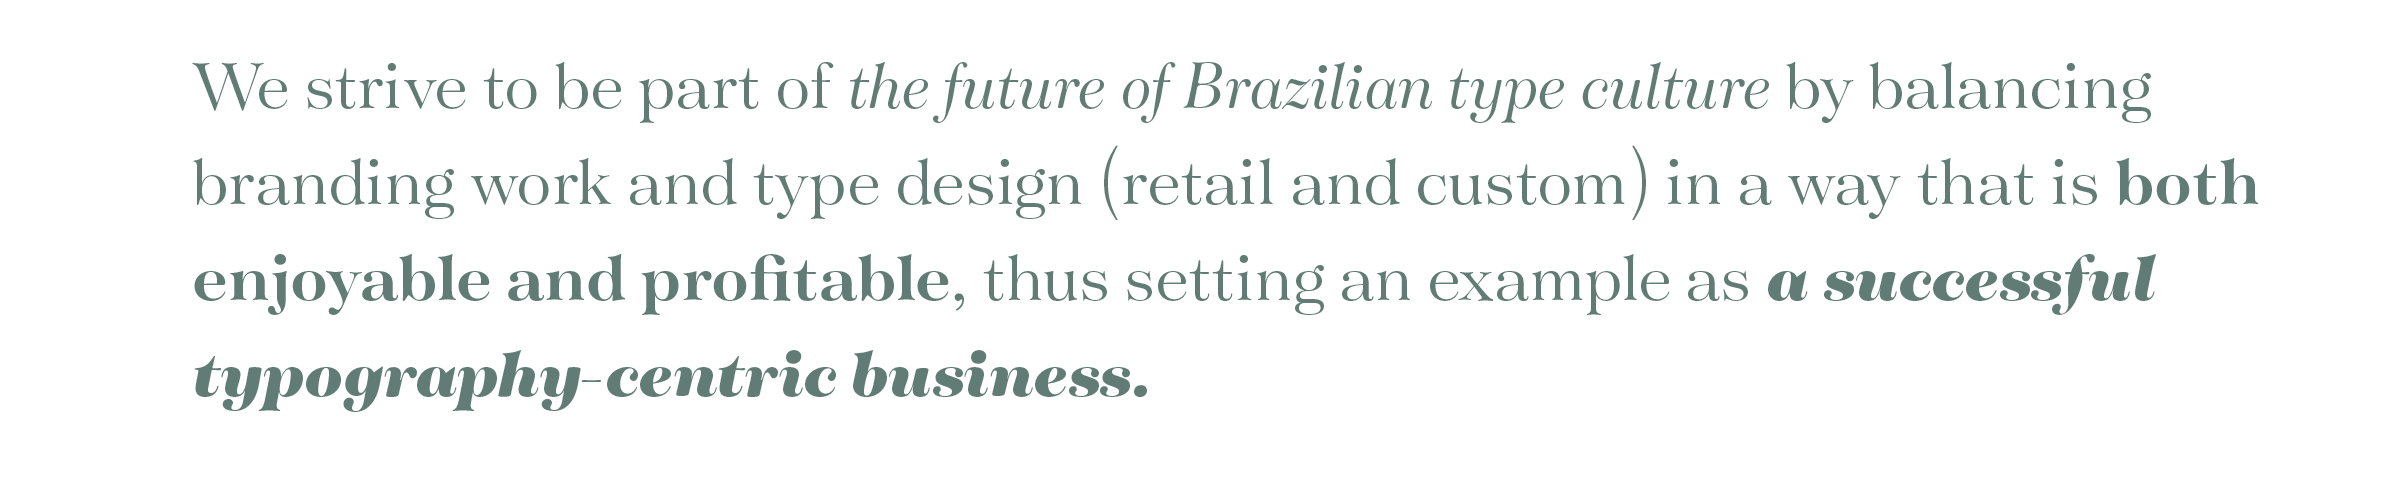 Quote by Rodrigo Saiani set in his typeface Tenez.